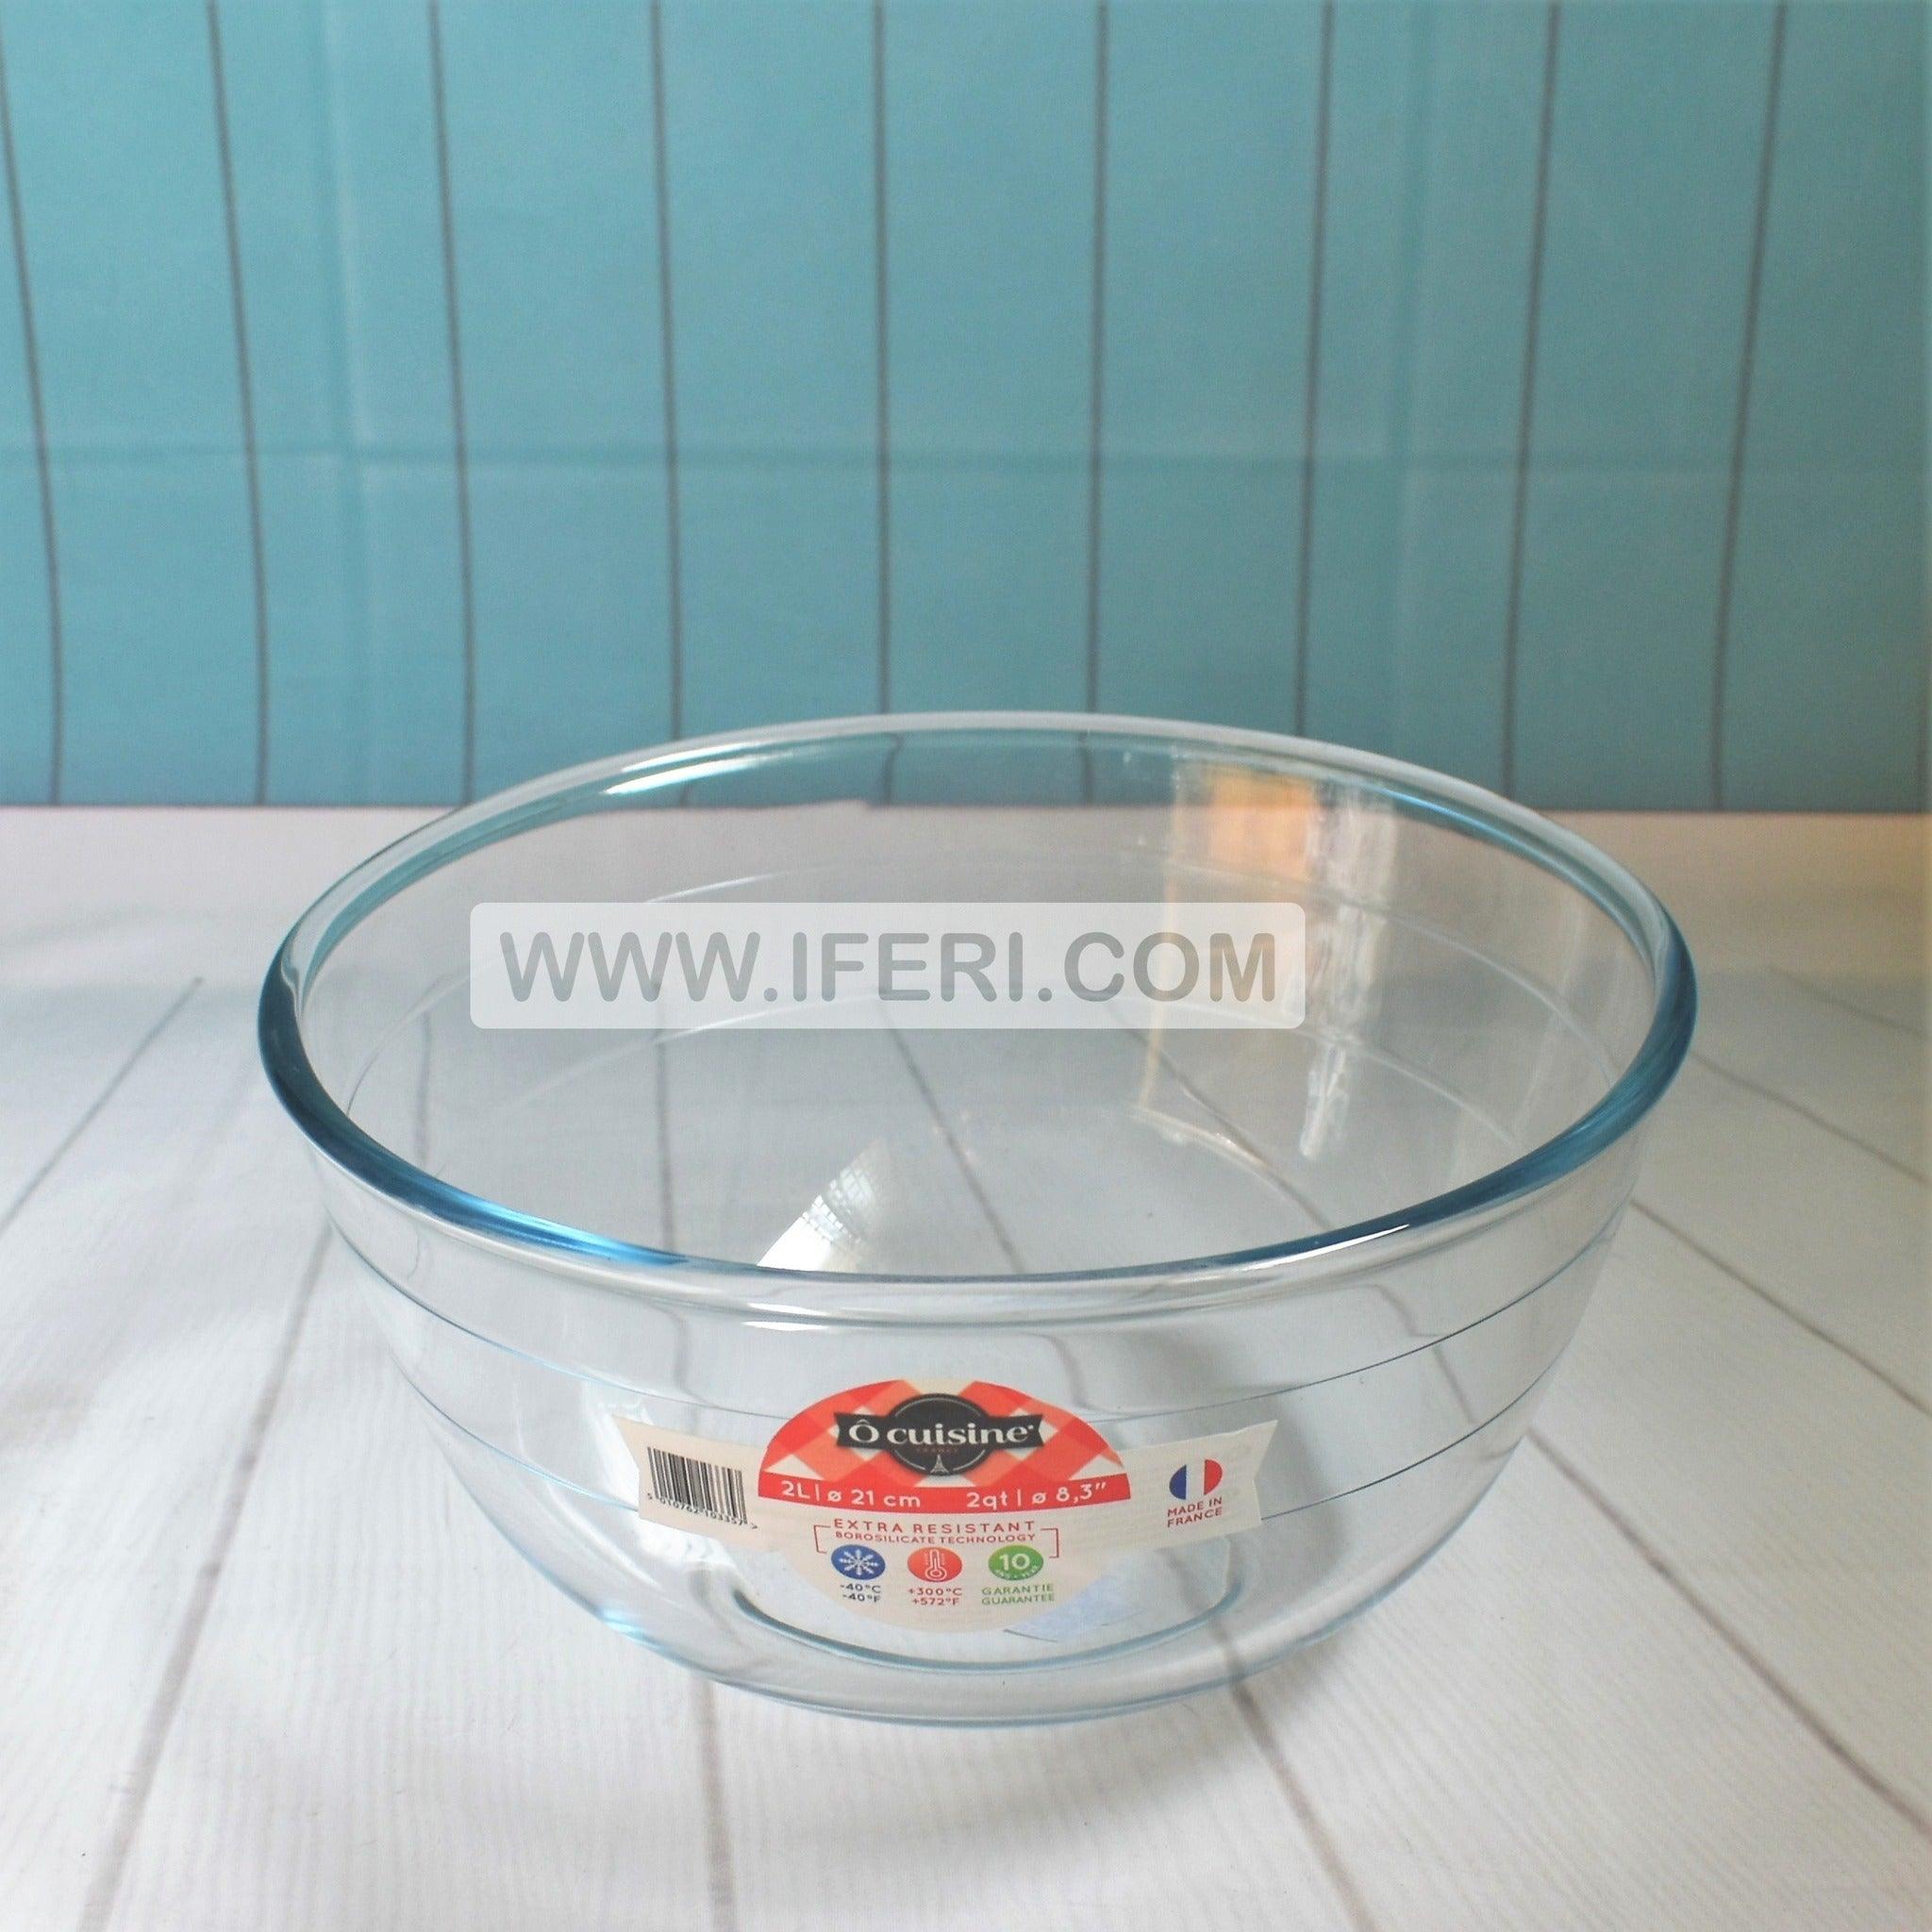 2 Liter O'cuisine Deep Glass Mixing Bowl UT4284 Price in Bangladesh - iferi.com